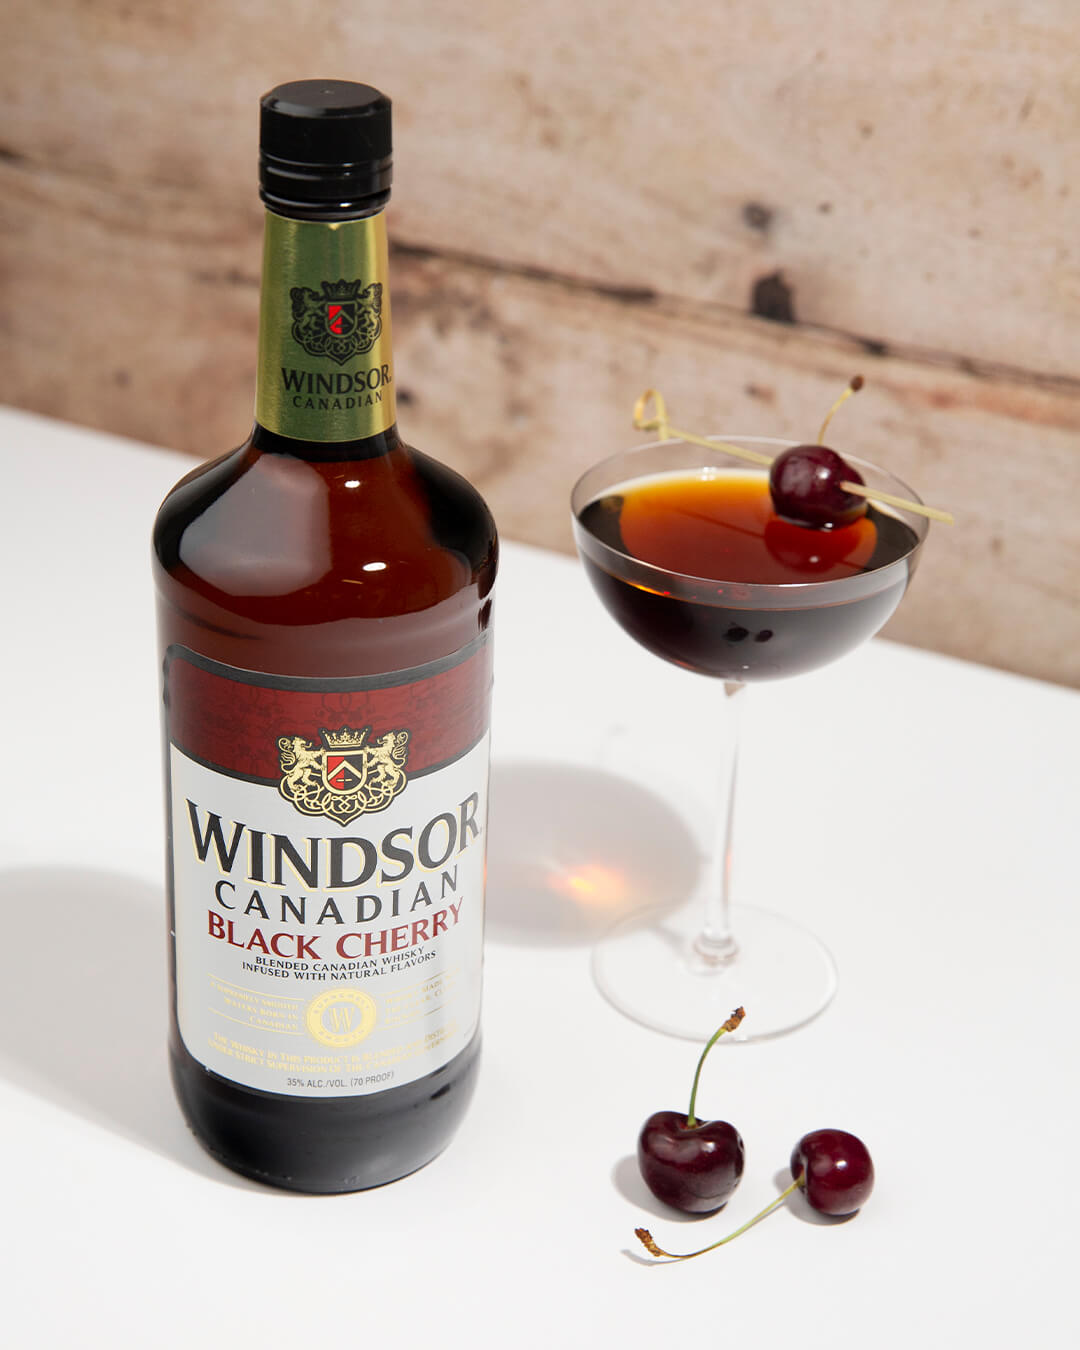 Windsor Canadian Black Cherry Whiskey